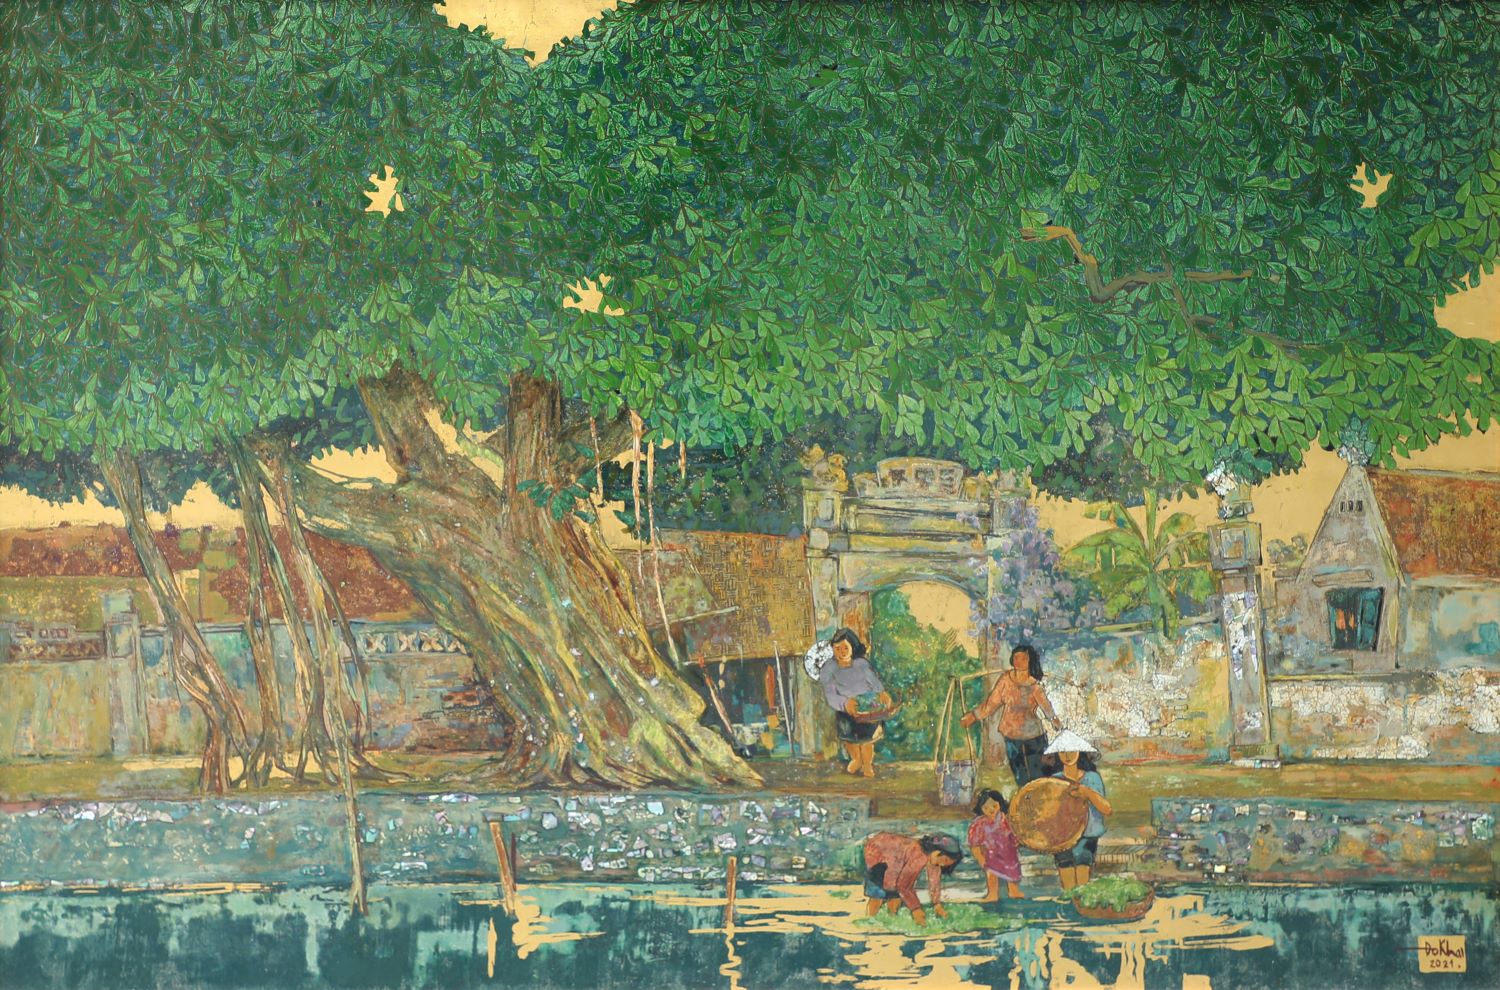 Nostalgia - Vietnamese Lacquer Painting by Artist Do Khai